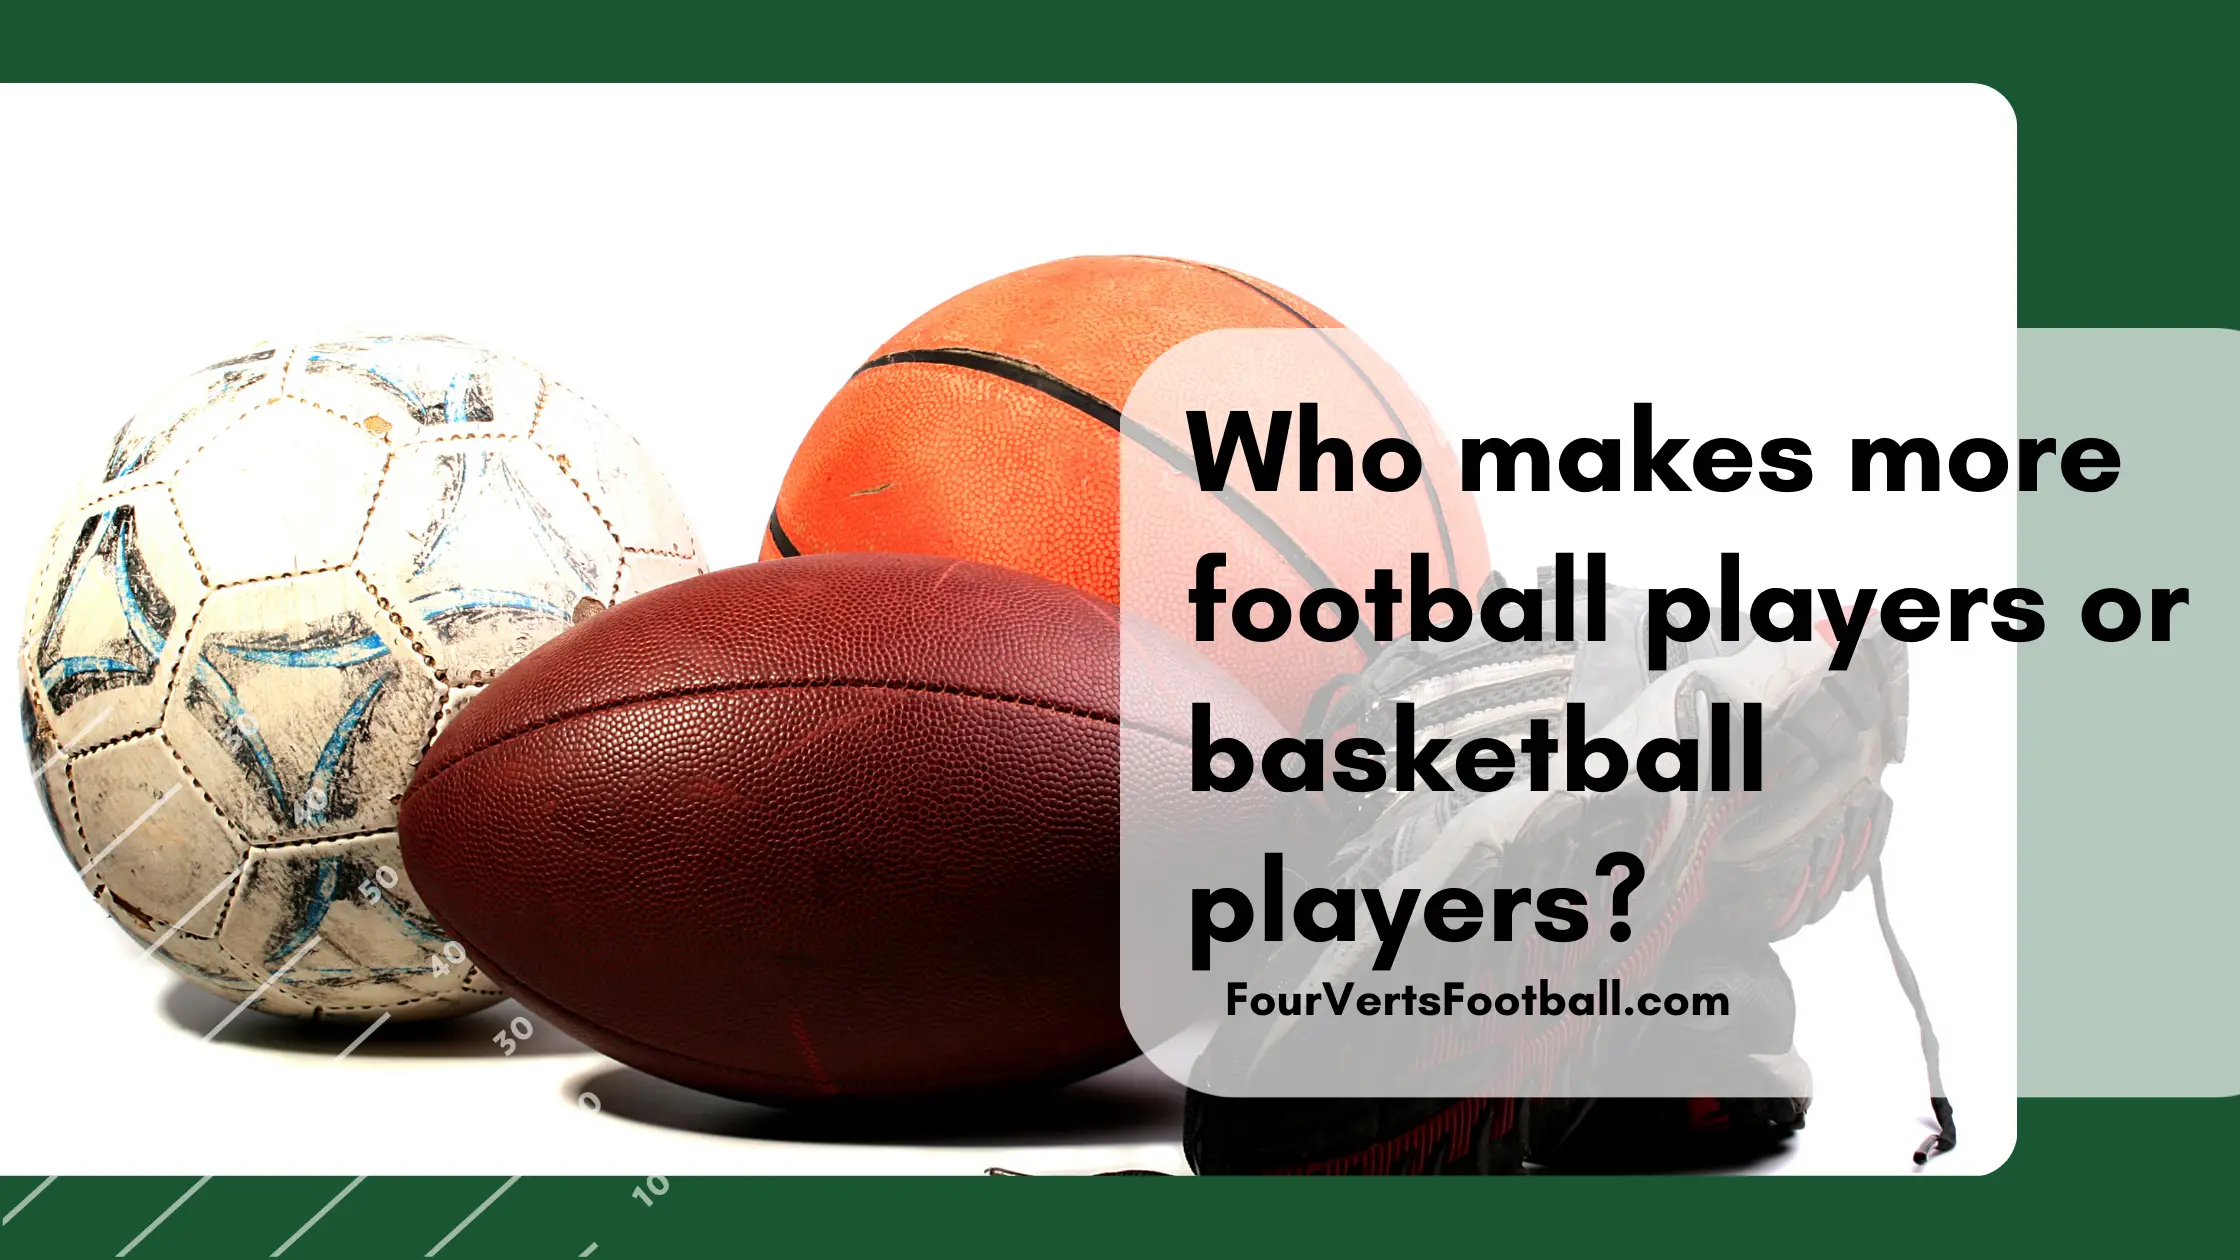 Who makes more football players or basketball players?